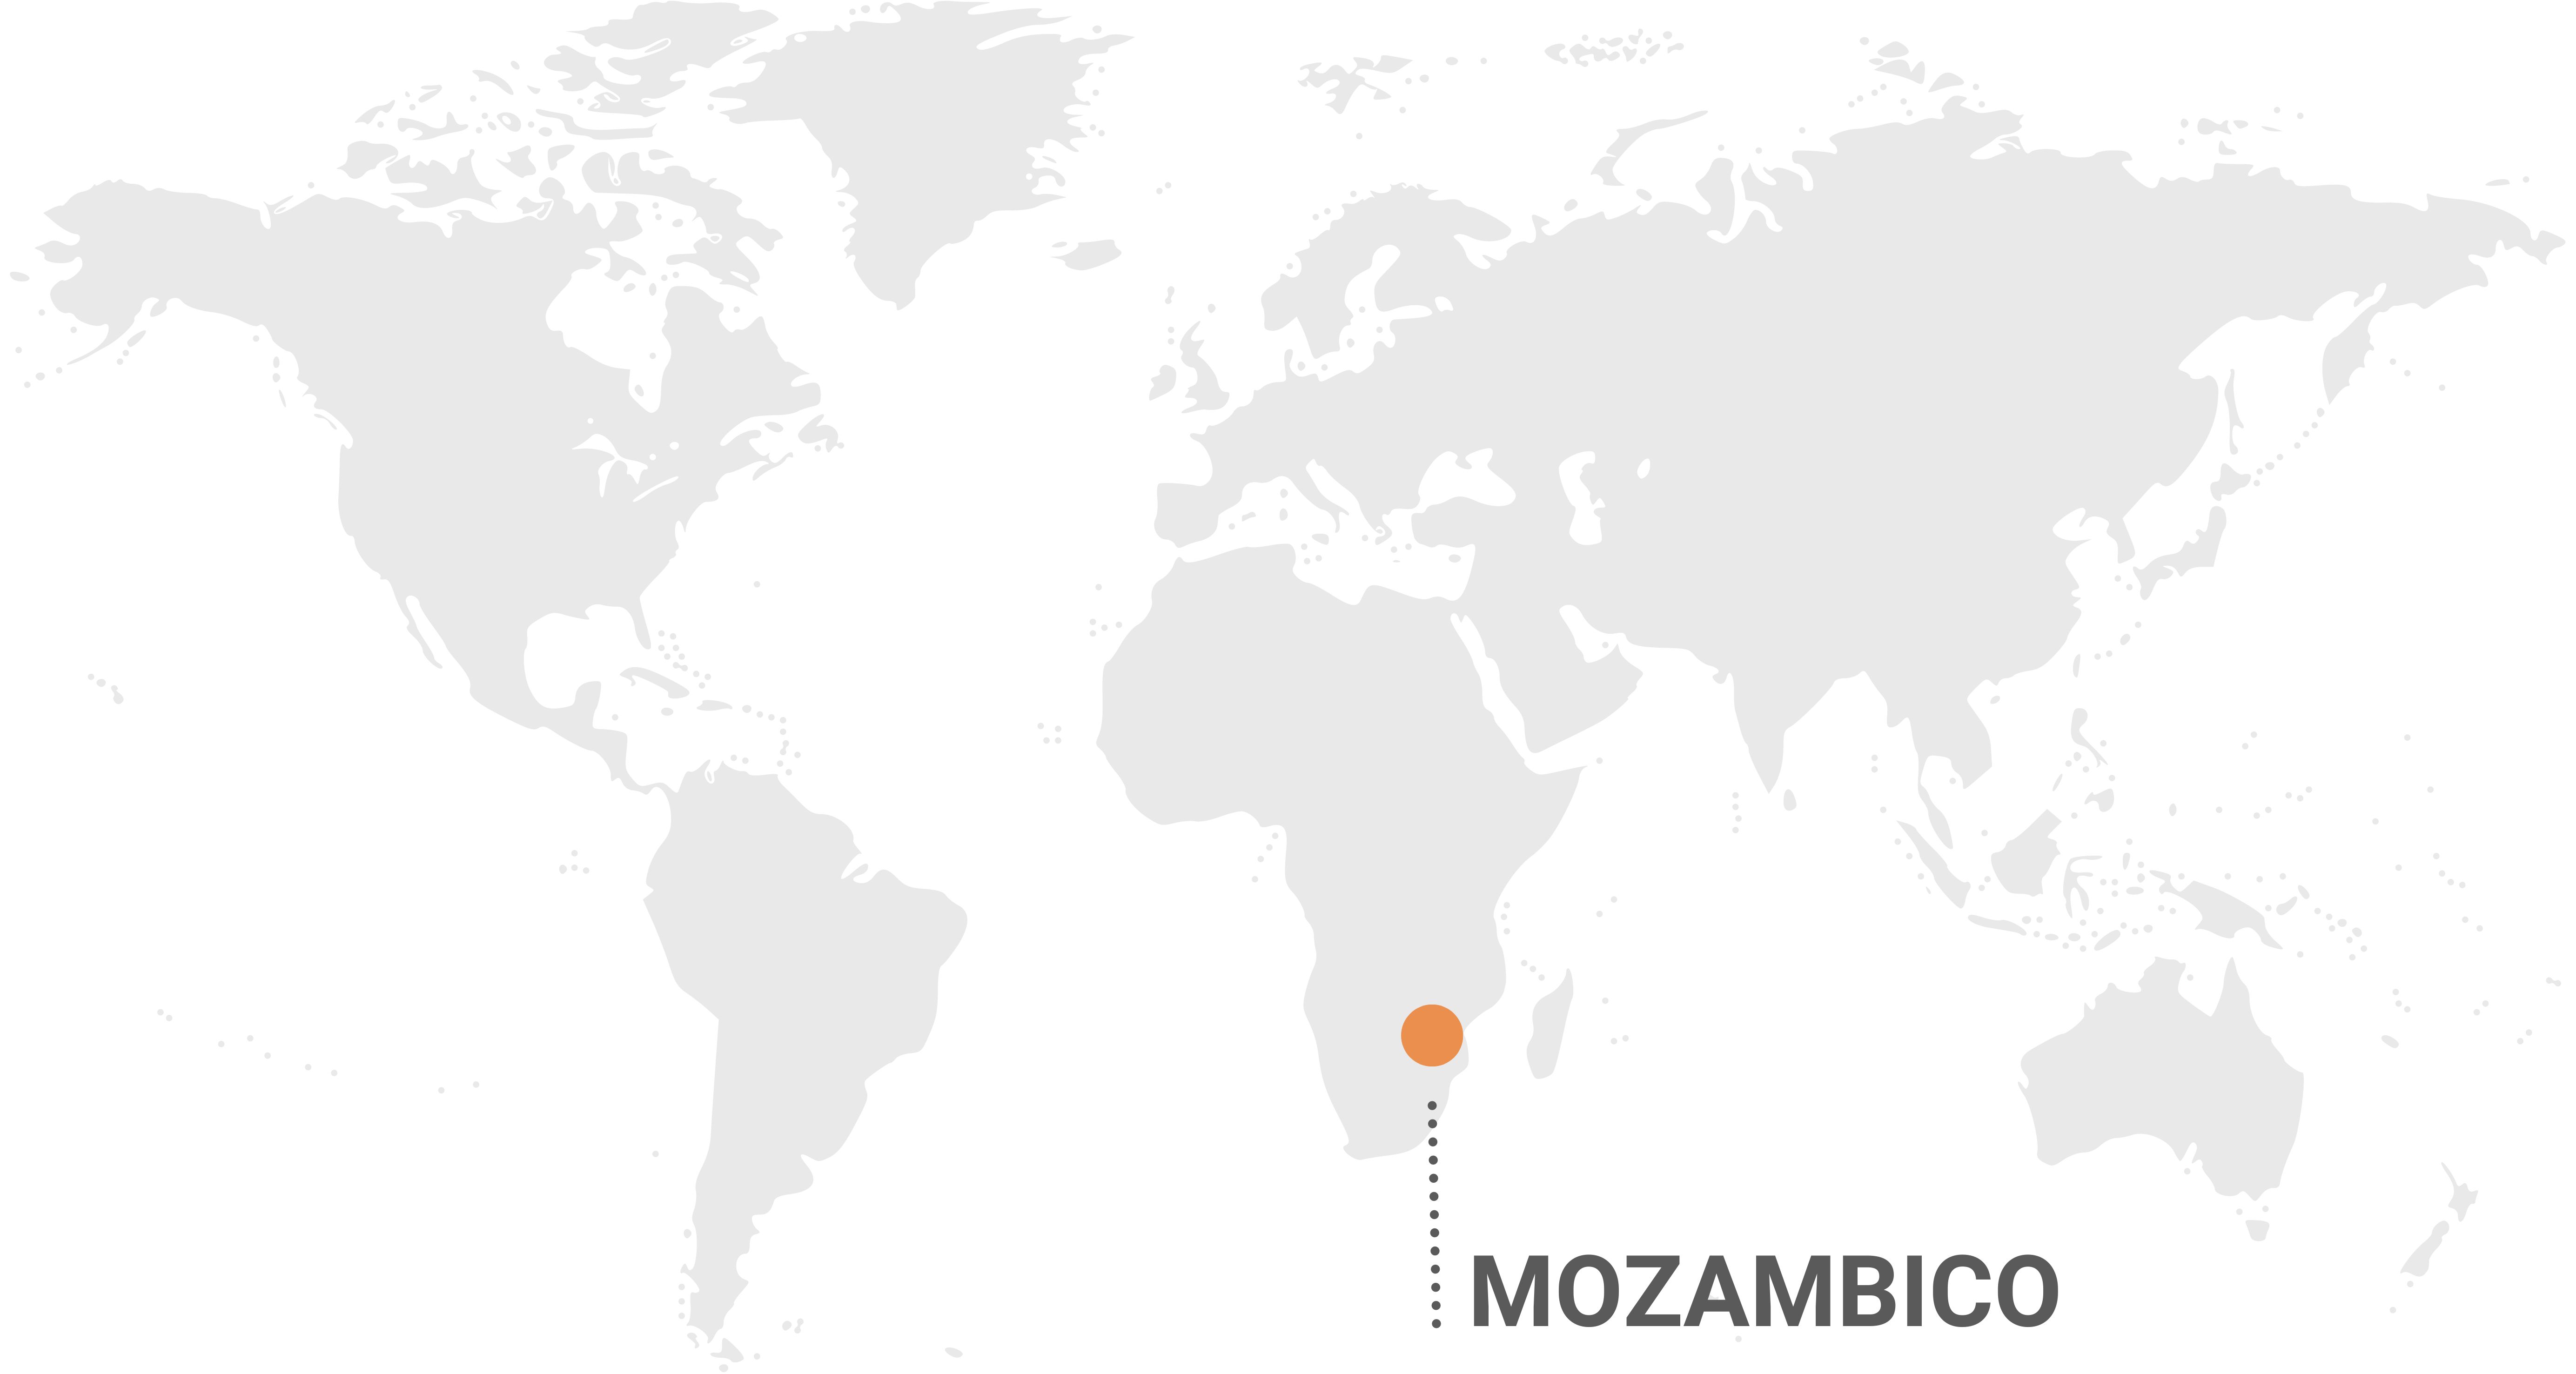 MOZAMBICO